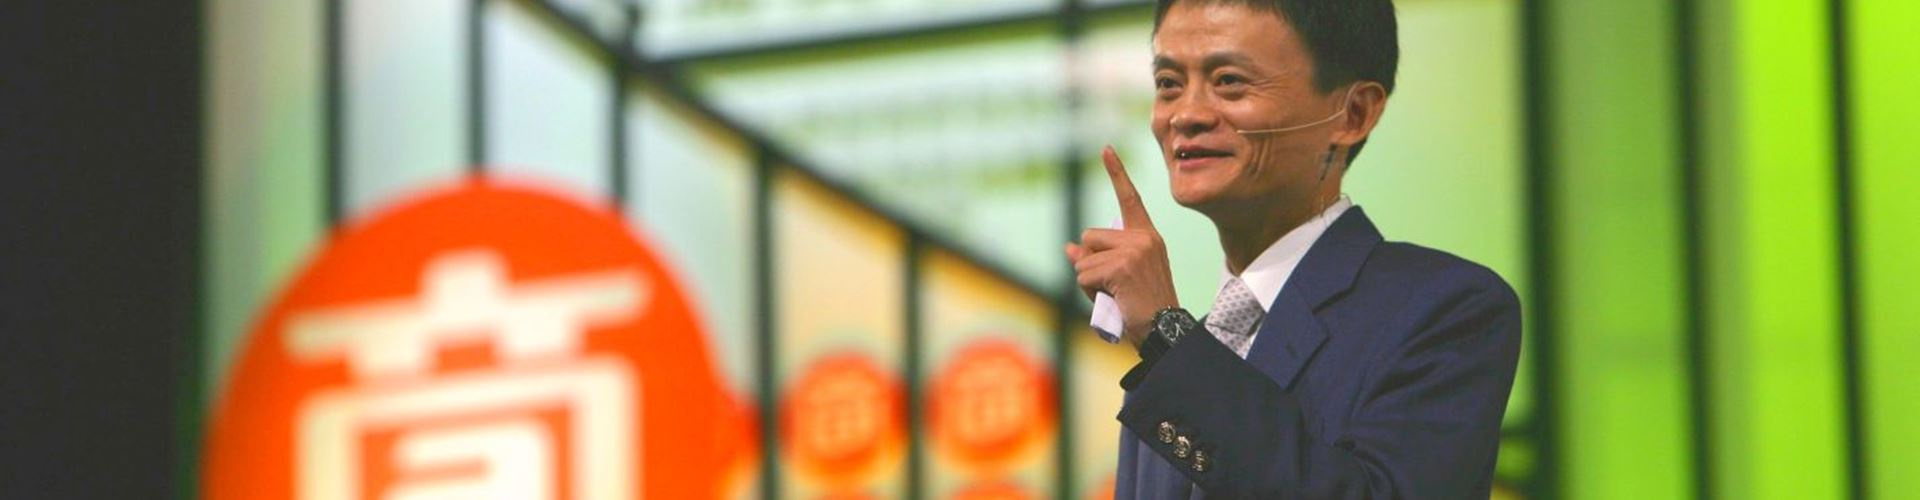 Alibaba makes record $25 billion IPO